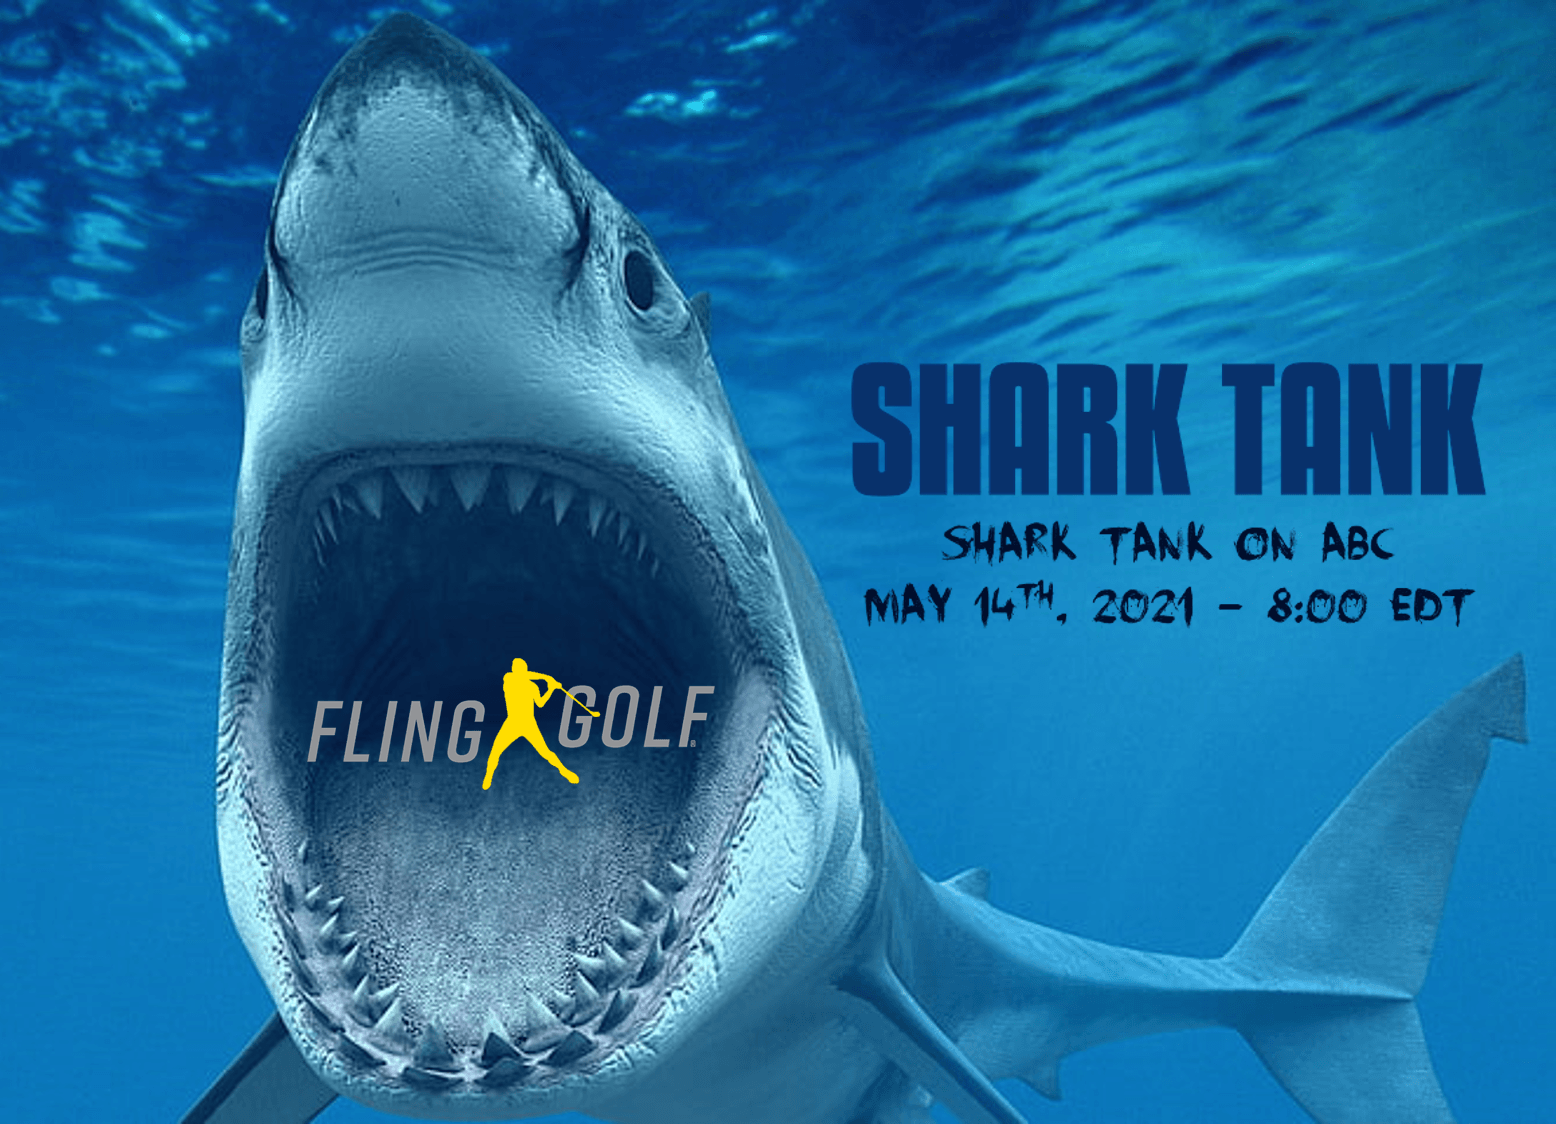 FlingGolf dives in to ABC's Shark Tank Friday Night!